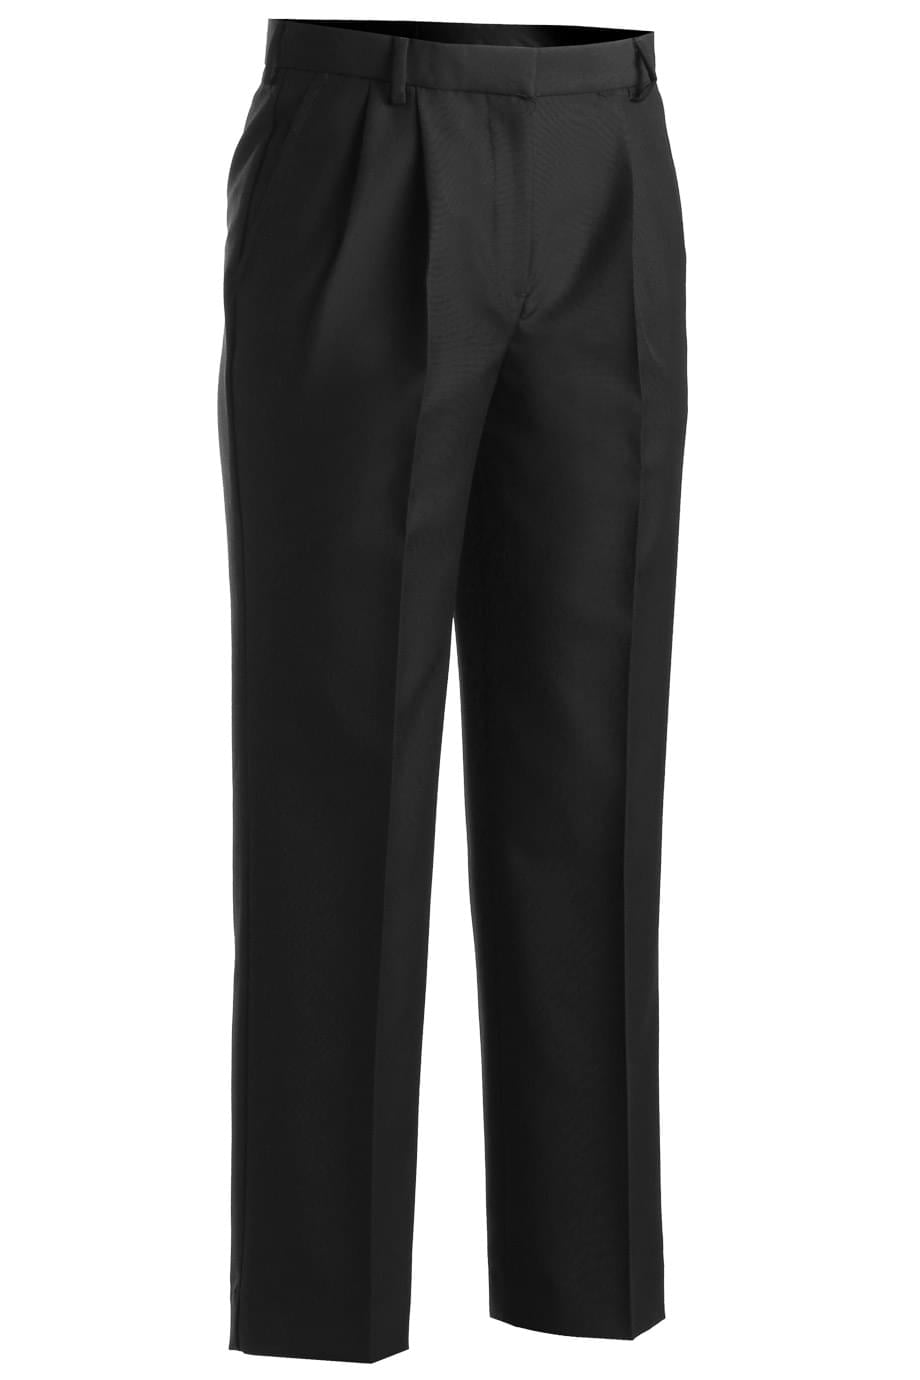 Edwards Ladies' Polyester Pleated Pant - Walmart.com